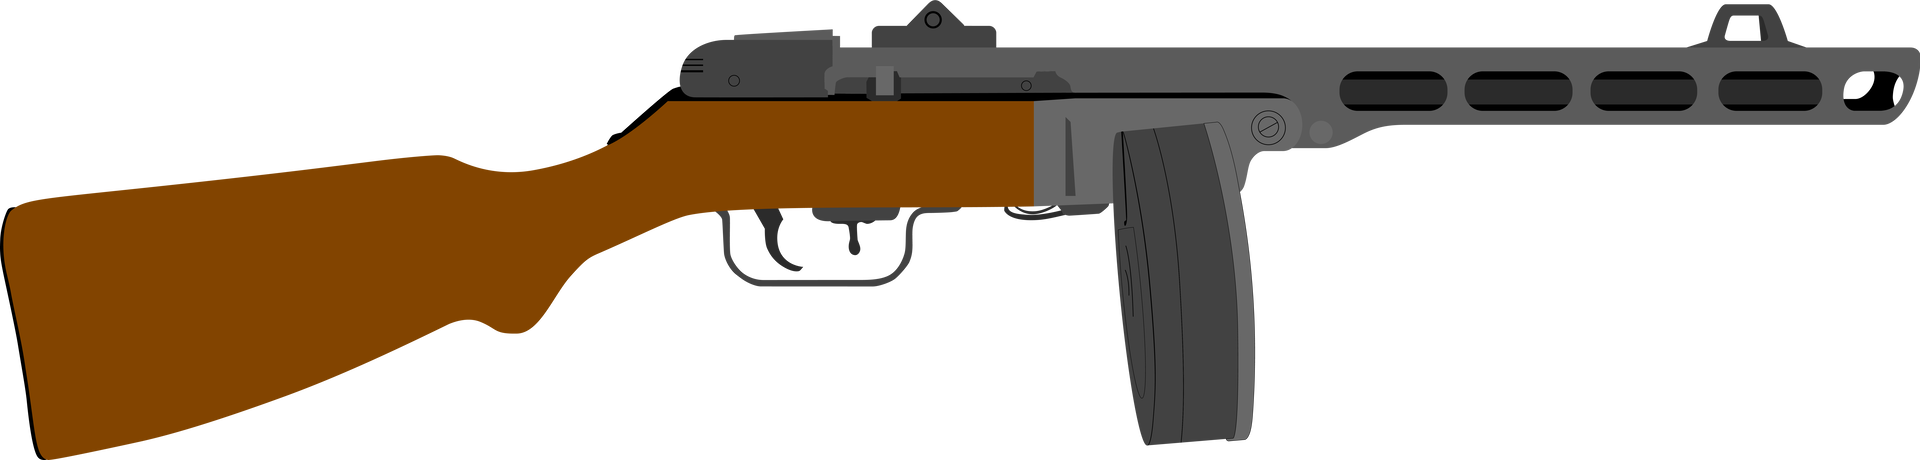 Antitwicesovietfront Ppsh 41 Mod - Firearm (1920x460)